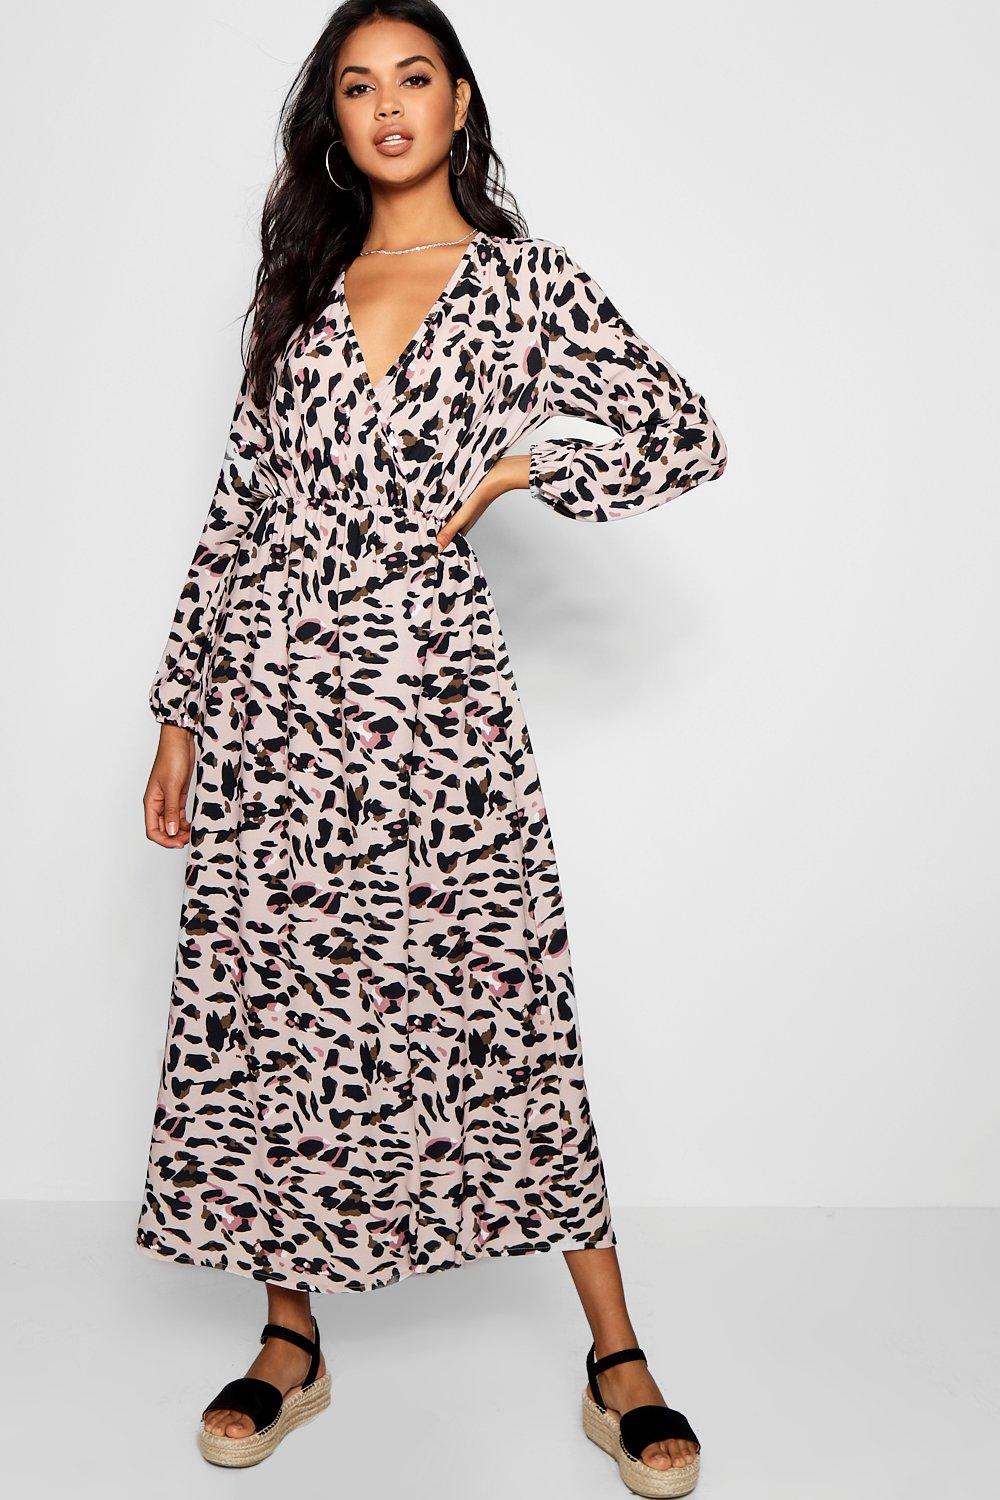 Leopard Print Maxi Dress | Boohoo ...